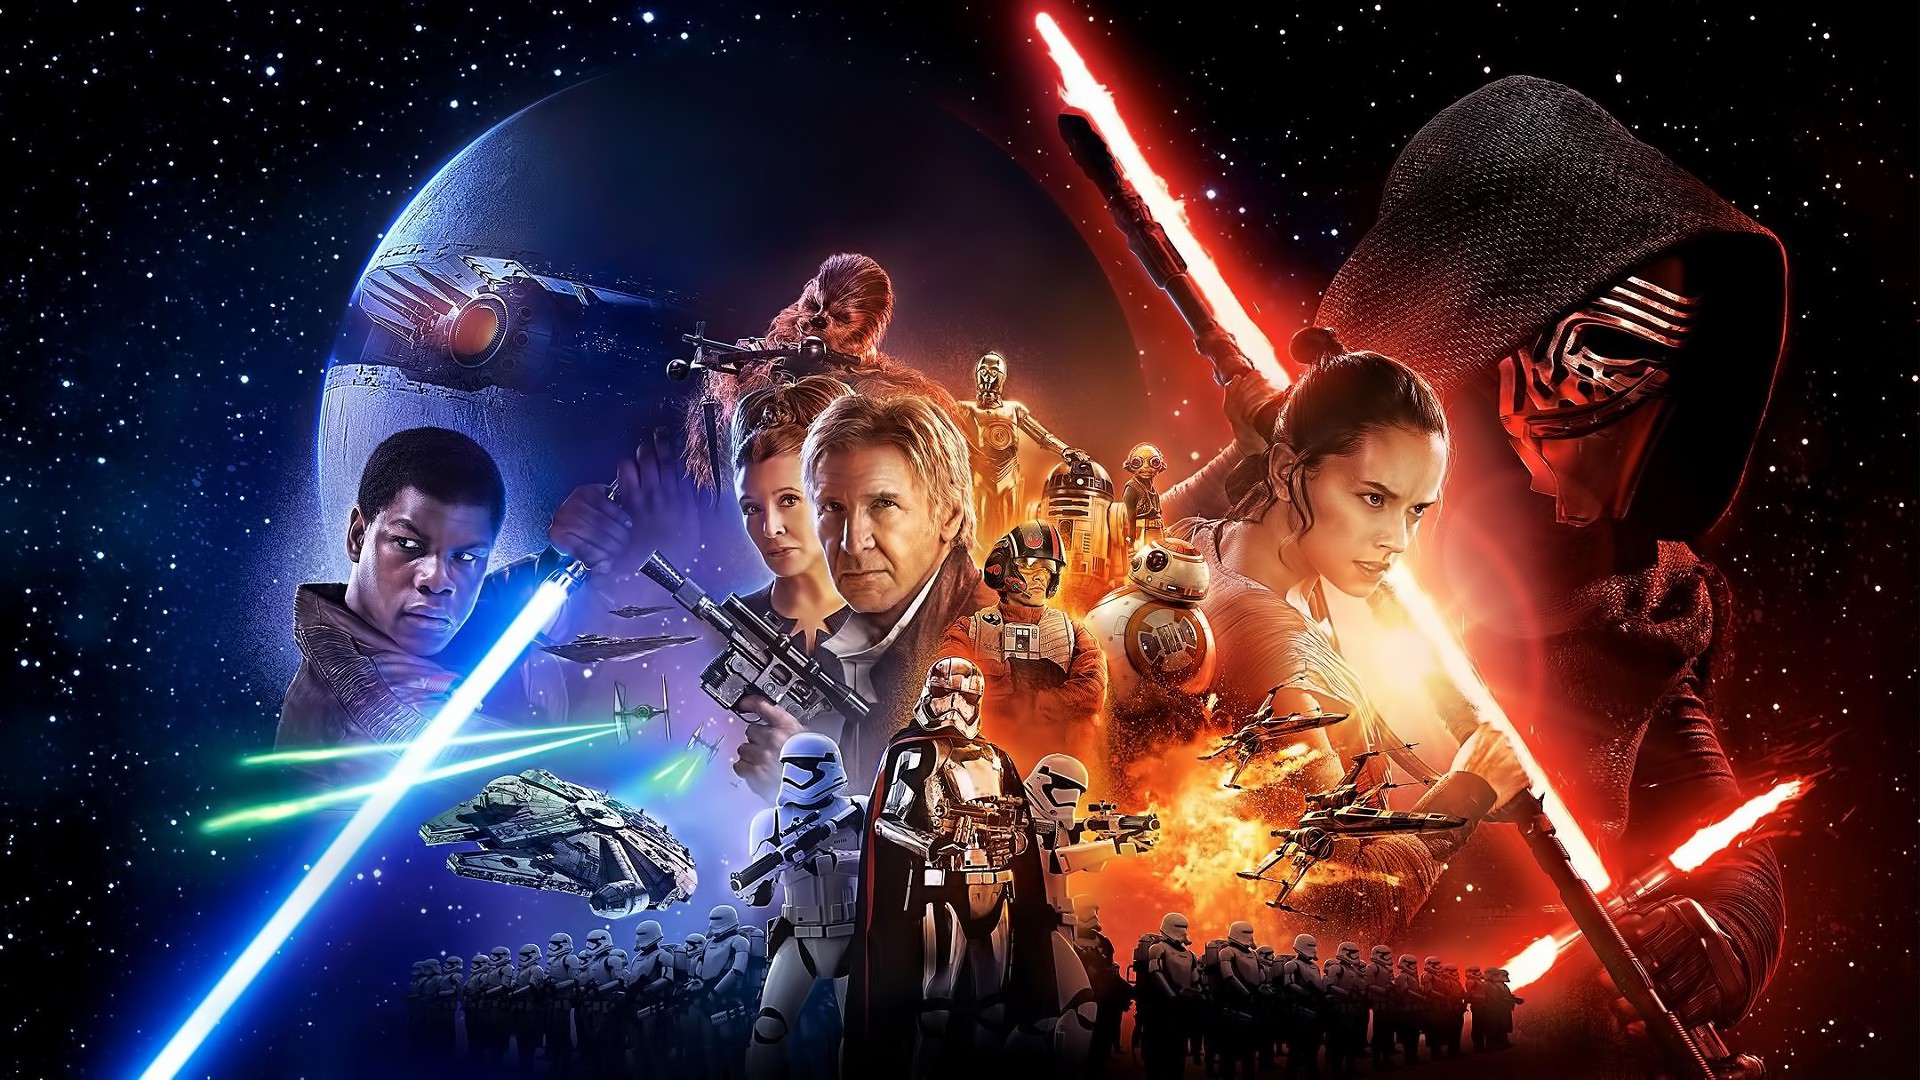 star wars the force awakens full movie hd youtubeonfire